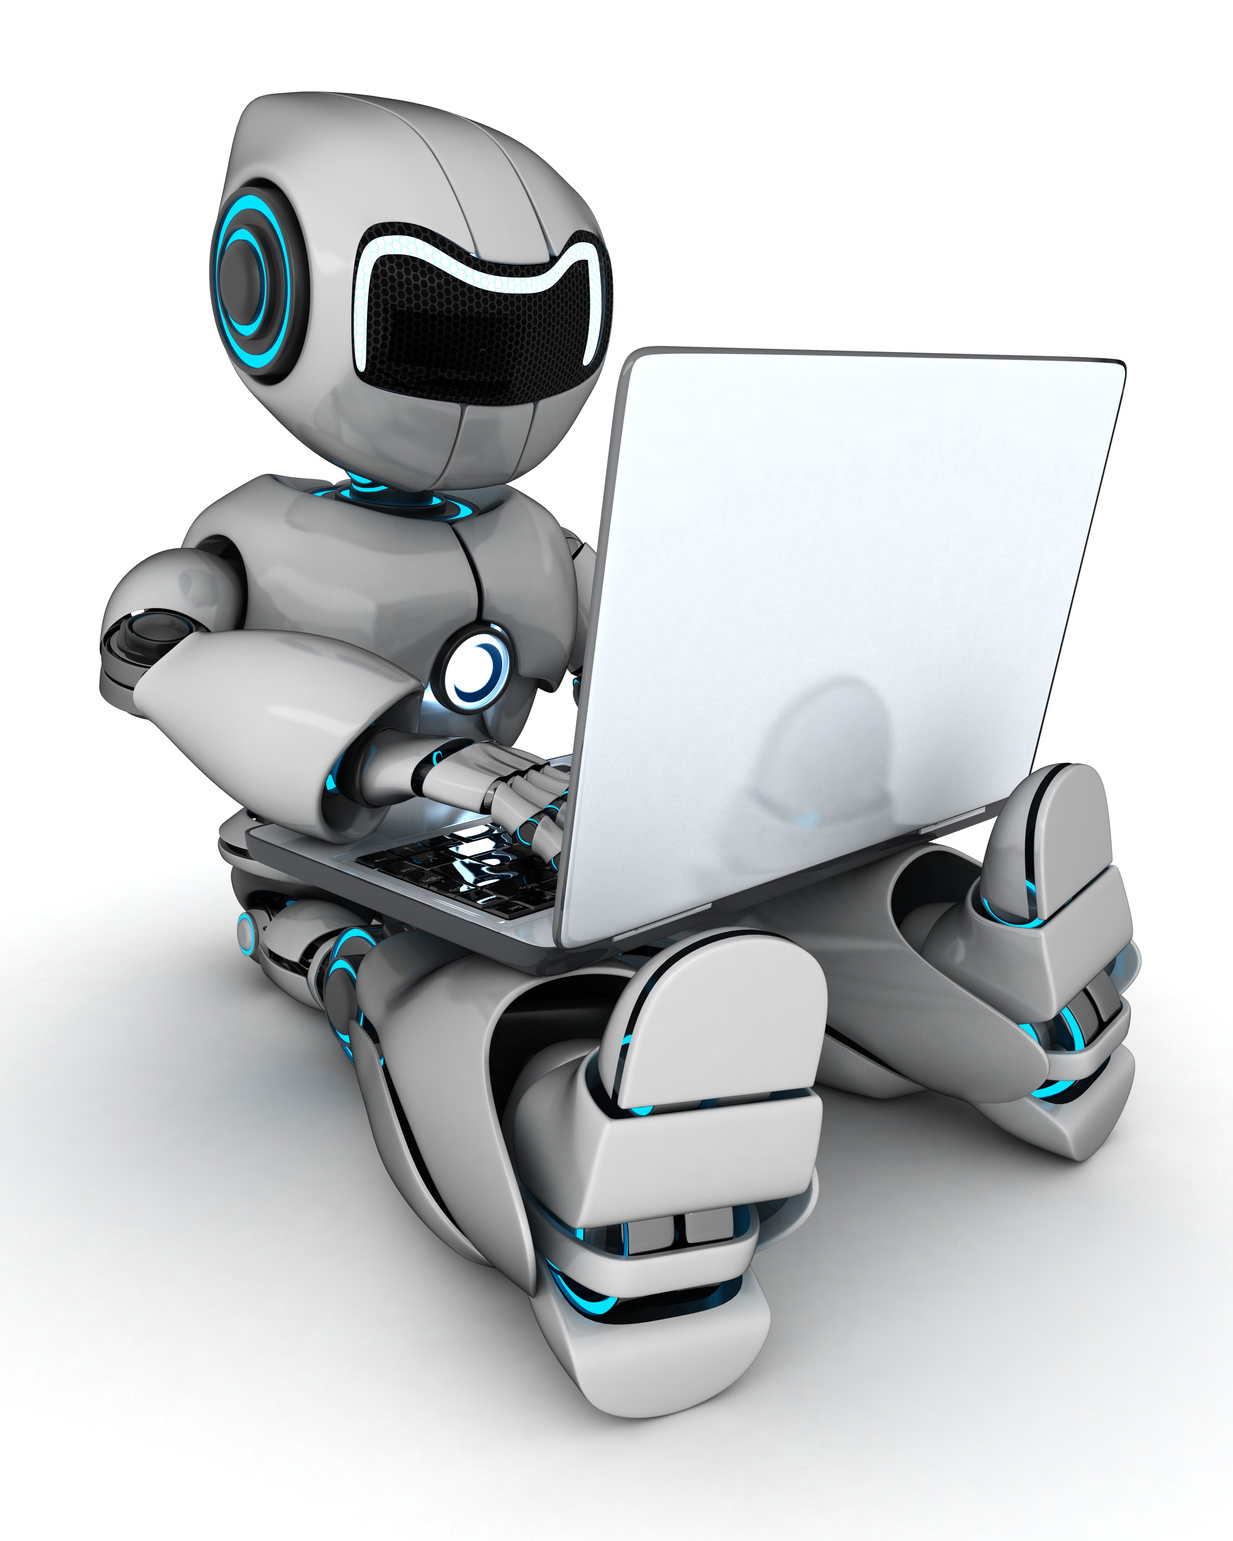 ربات معامله گر فارکس چیست؟ربات متاتریدر، ربات سیگنال فارکس، ربات هوش مصنوعی فارکس 